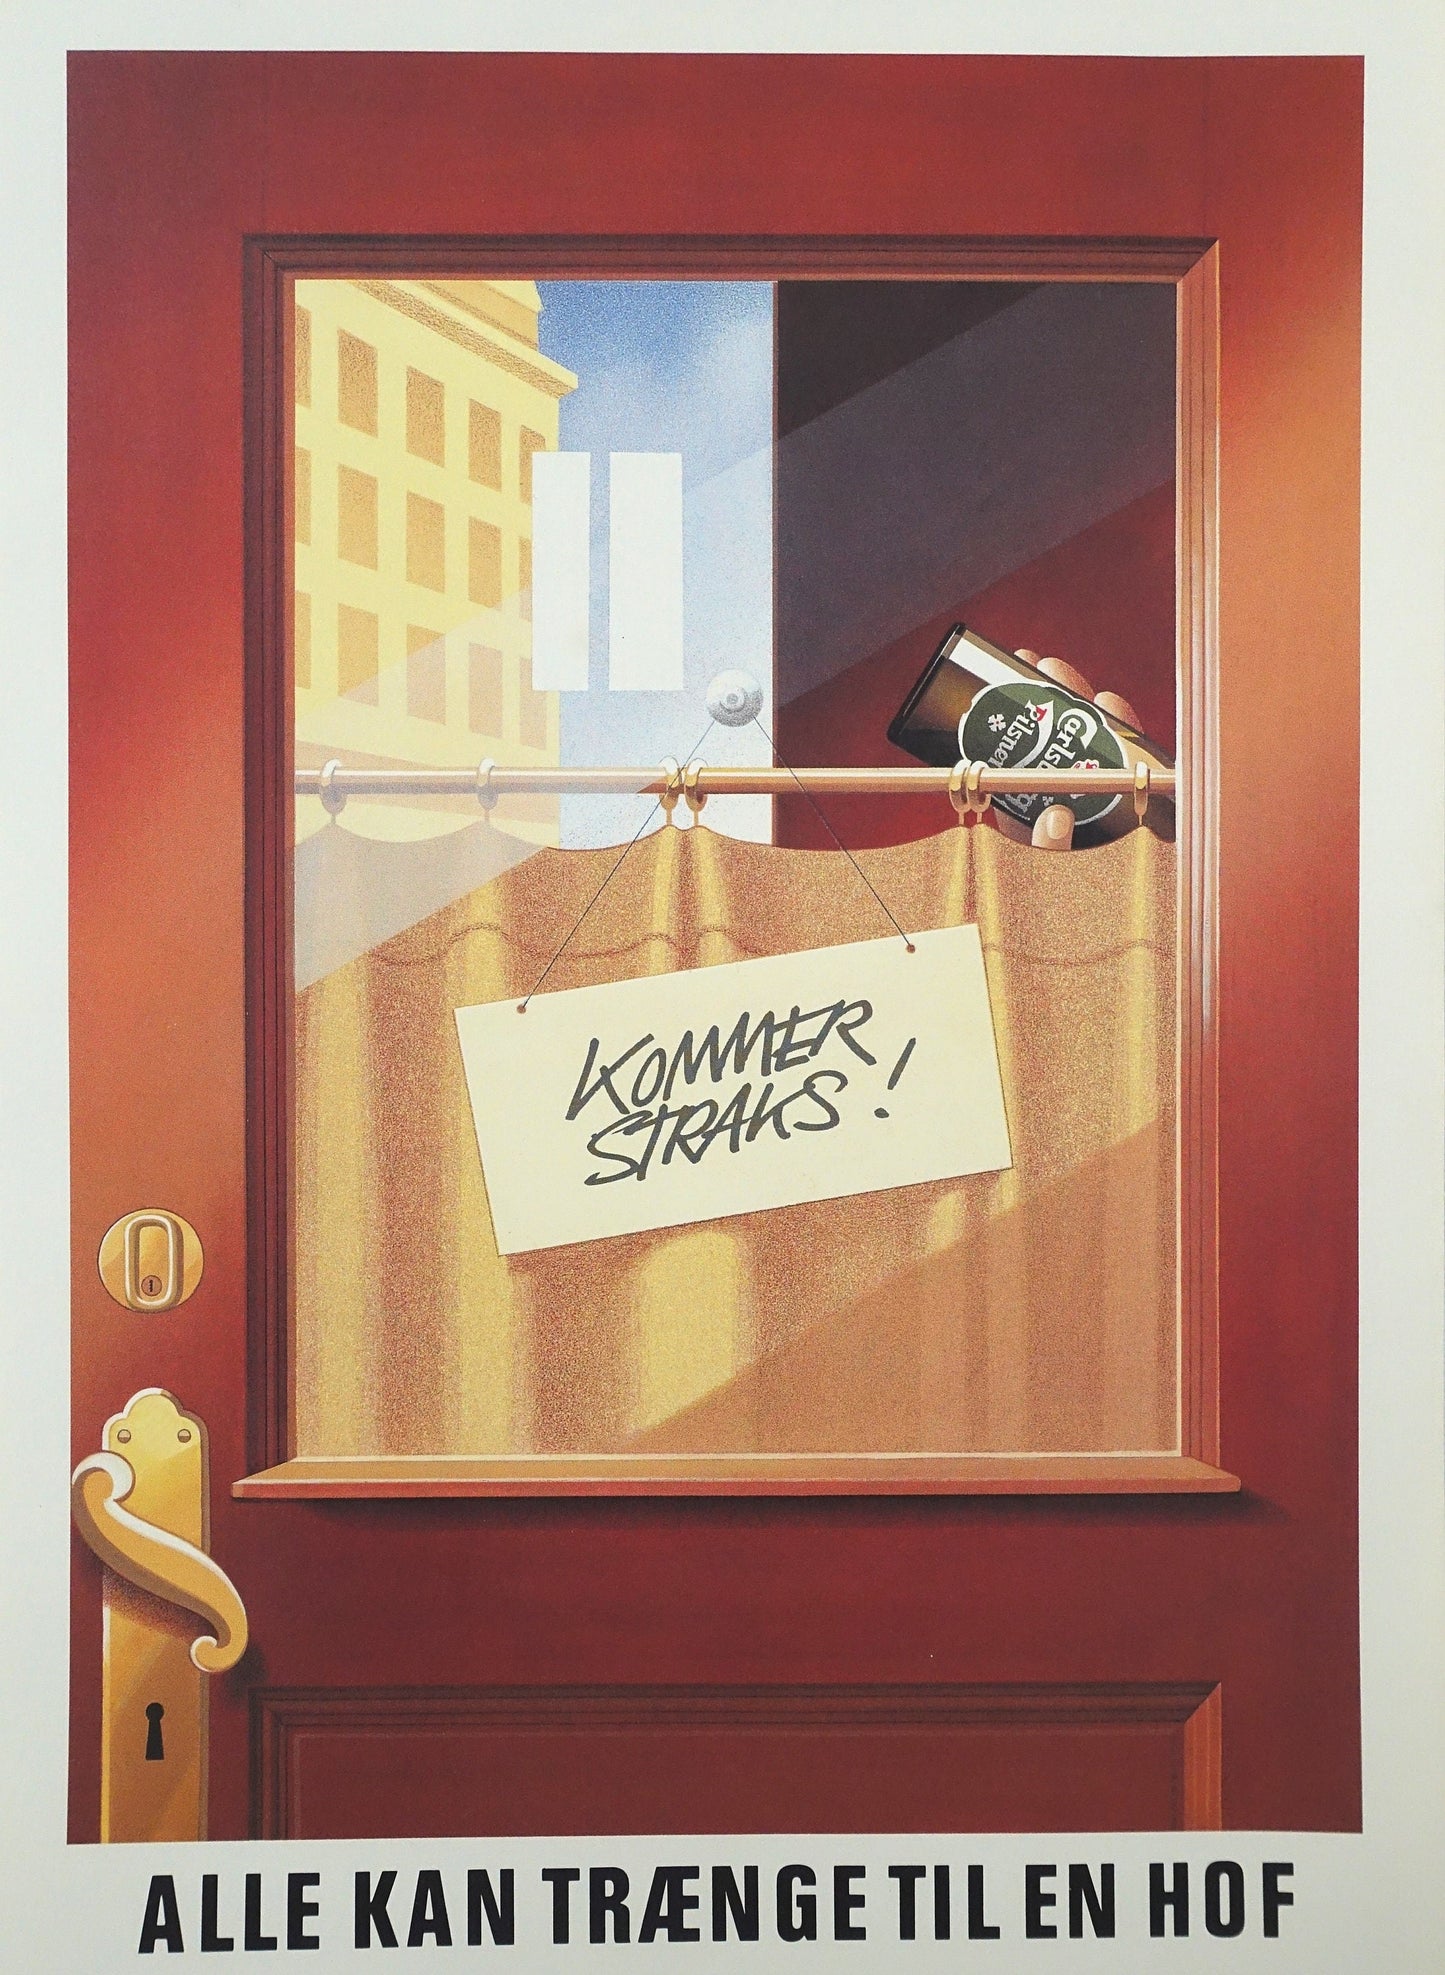 1980s Carlsberg Beer Ad by Joe Petagno (closed bar) - Original Vintage Poster